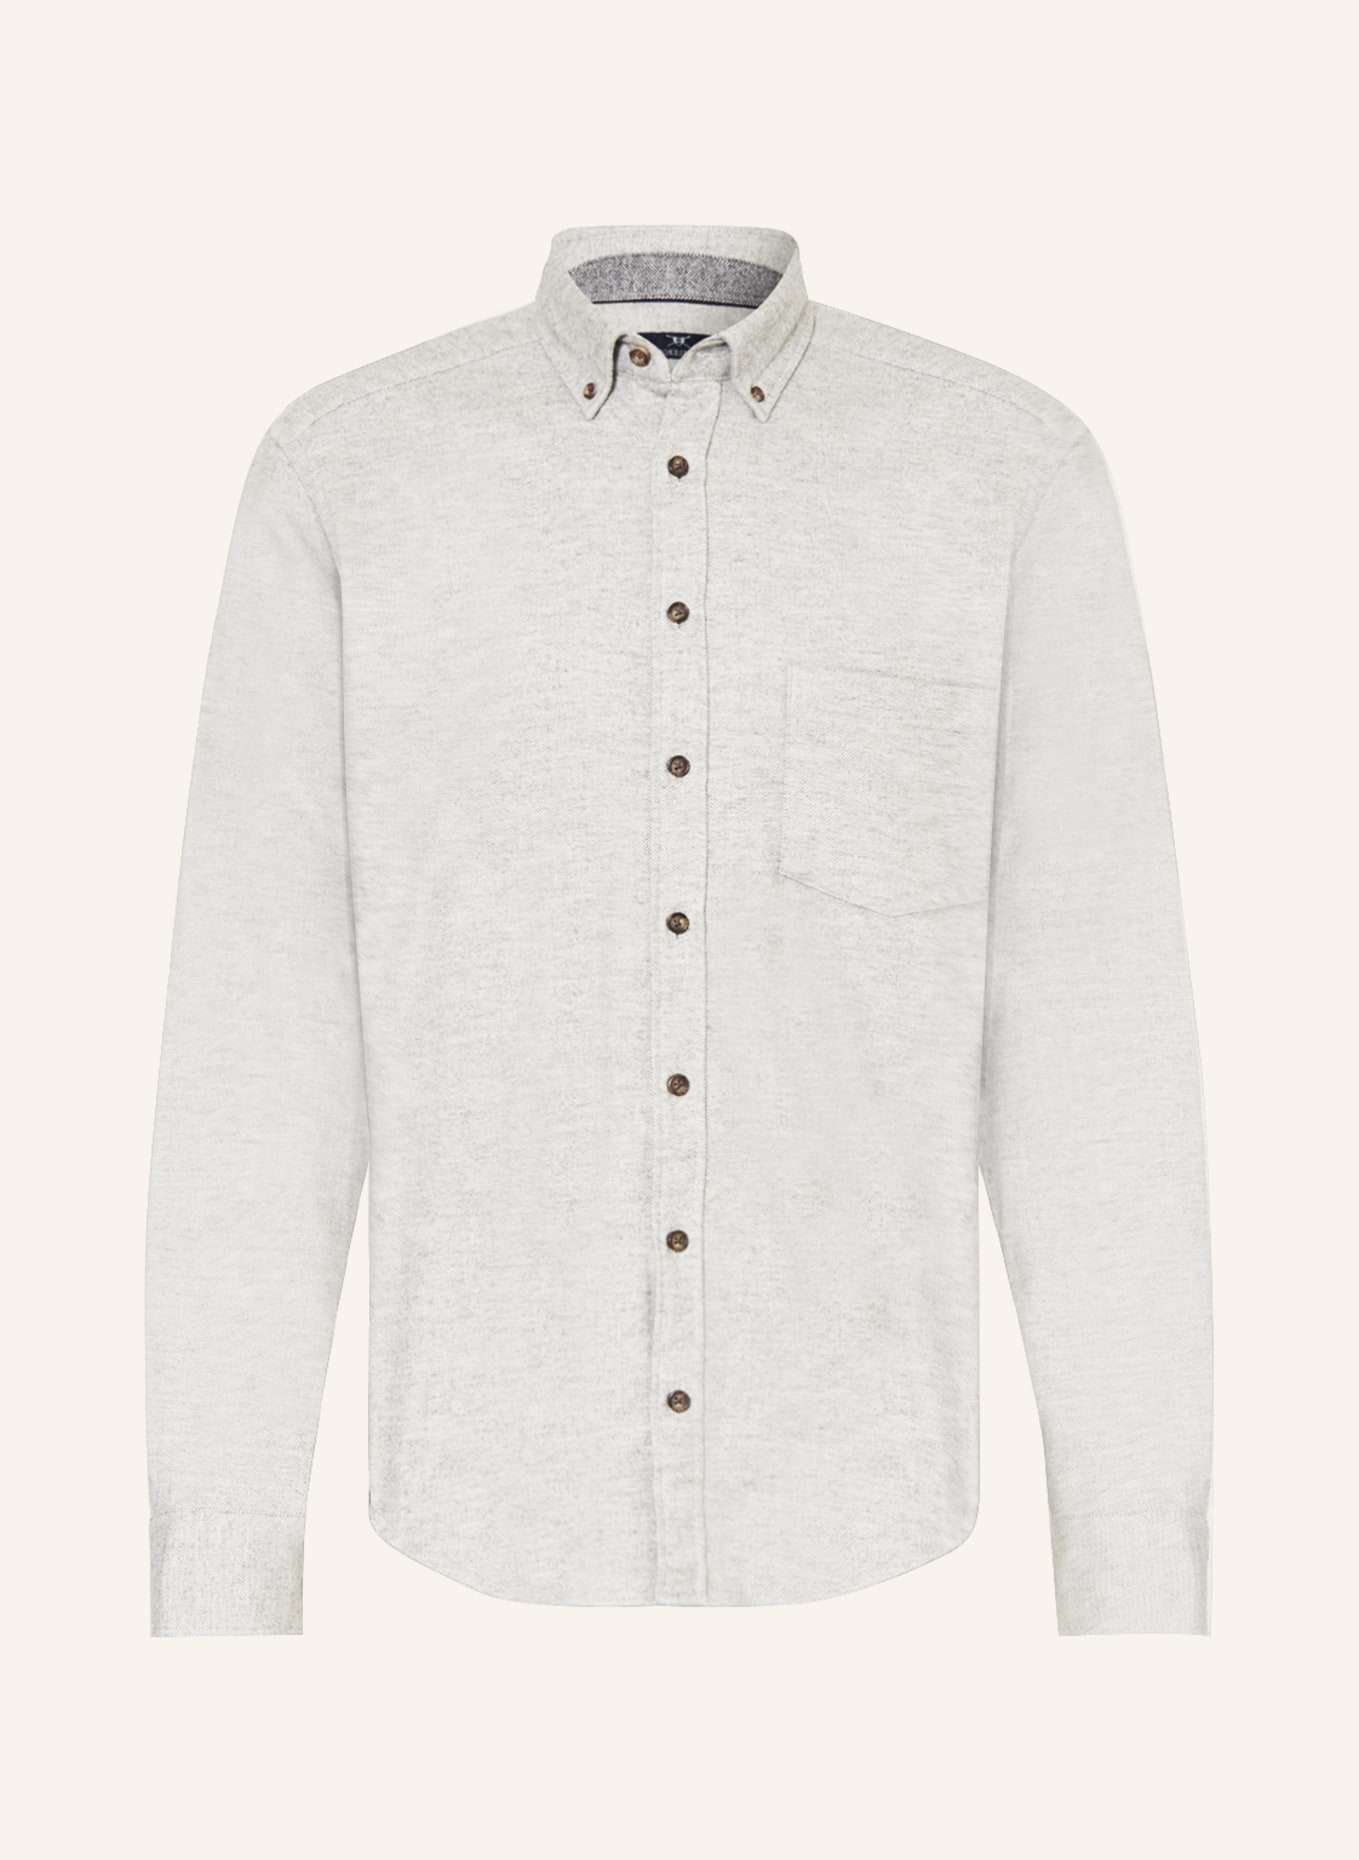 STROKESMAN'S Flannel shirt regular fit, Color: LIGHT GRAY (Image 1)